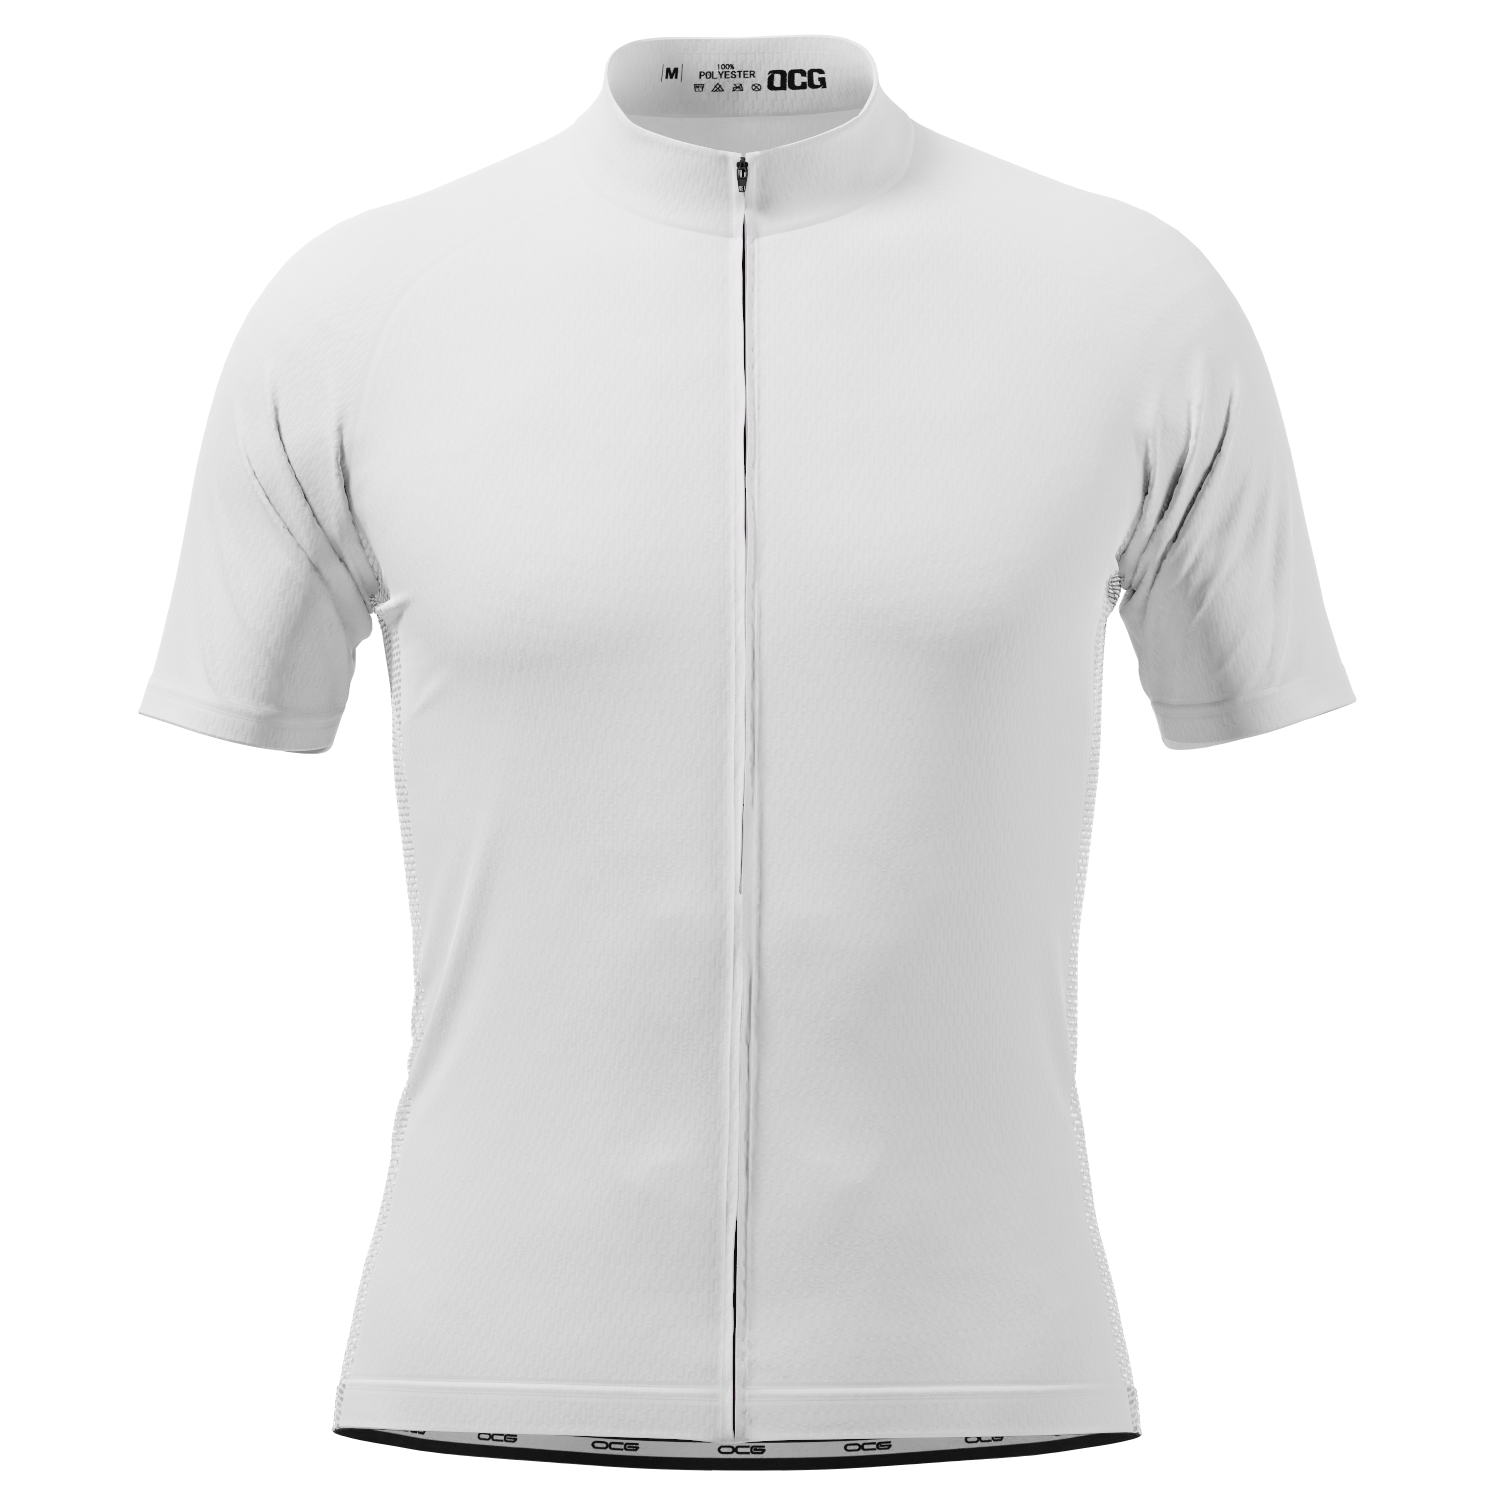 Men's OCG Plain Color Block Short Sleeve Cycling Jersey